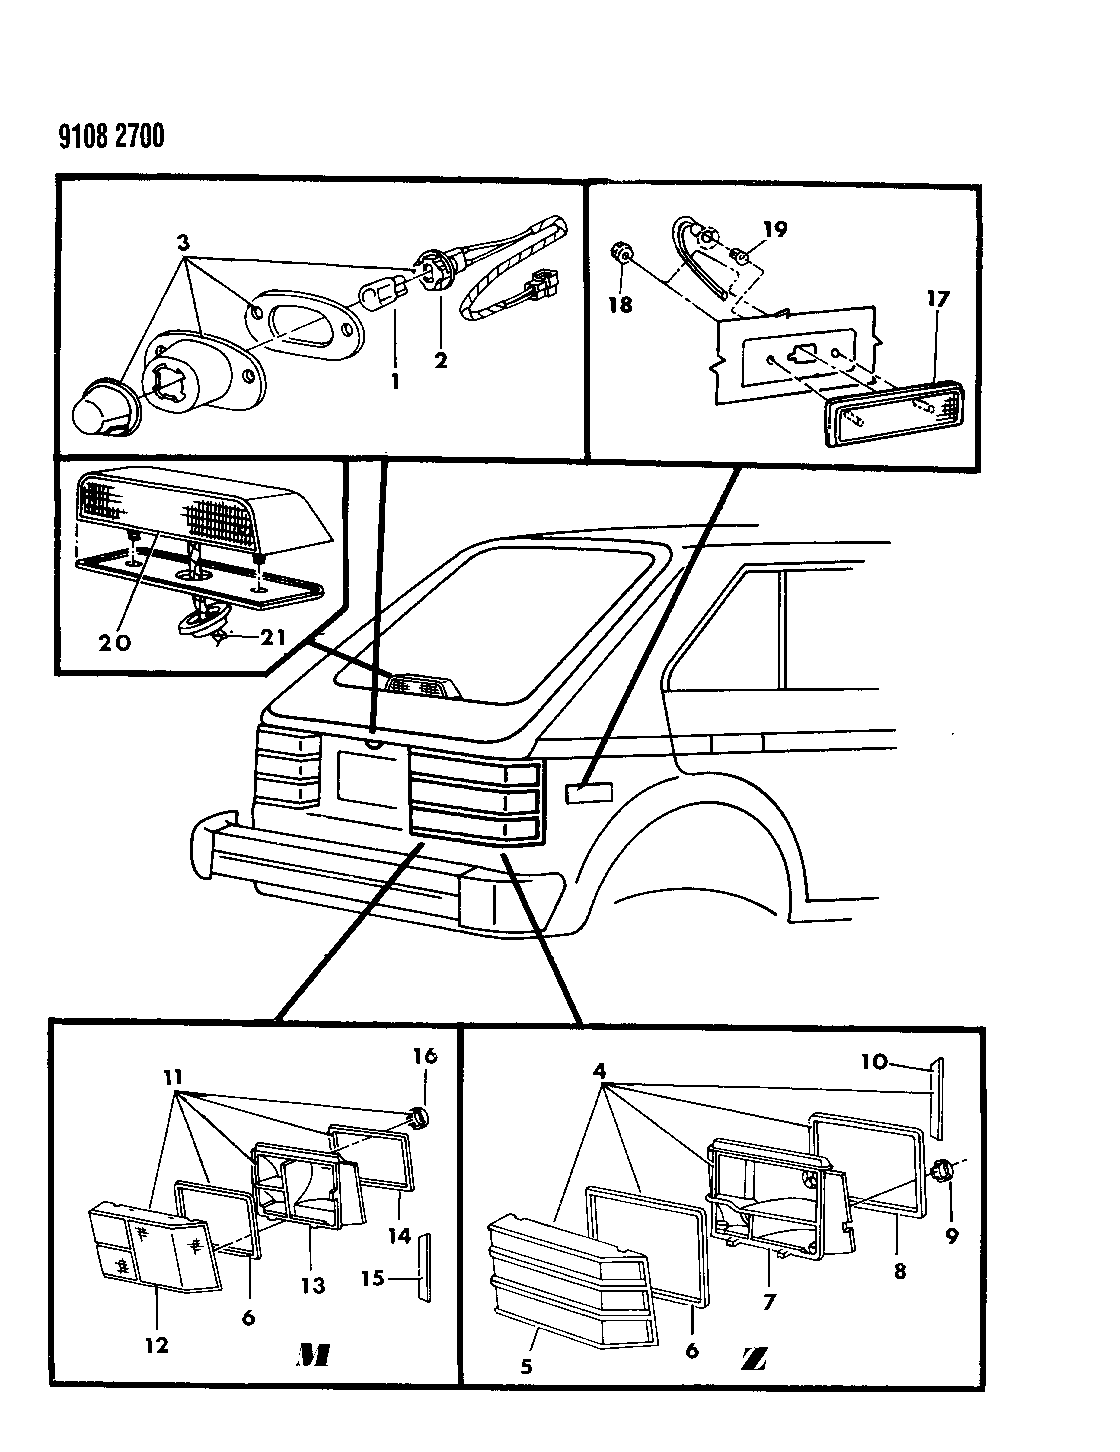 Dodge Omni Wiring Diagram